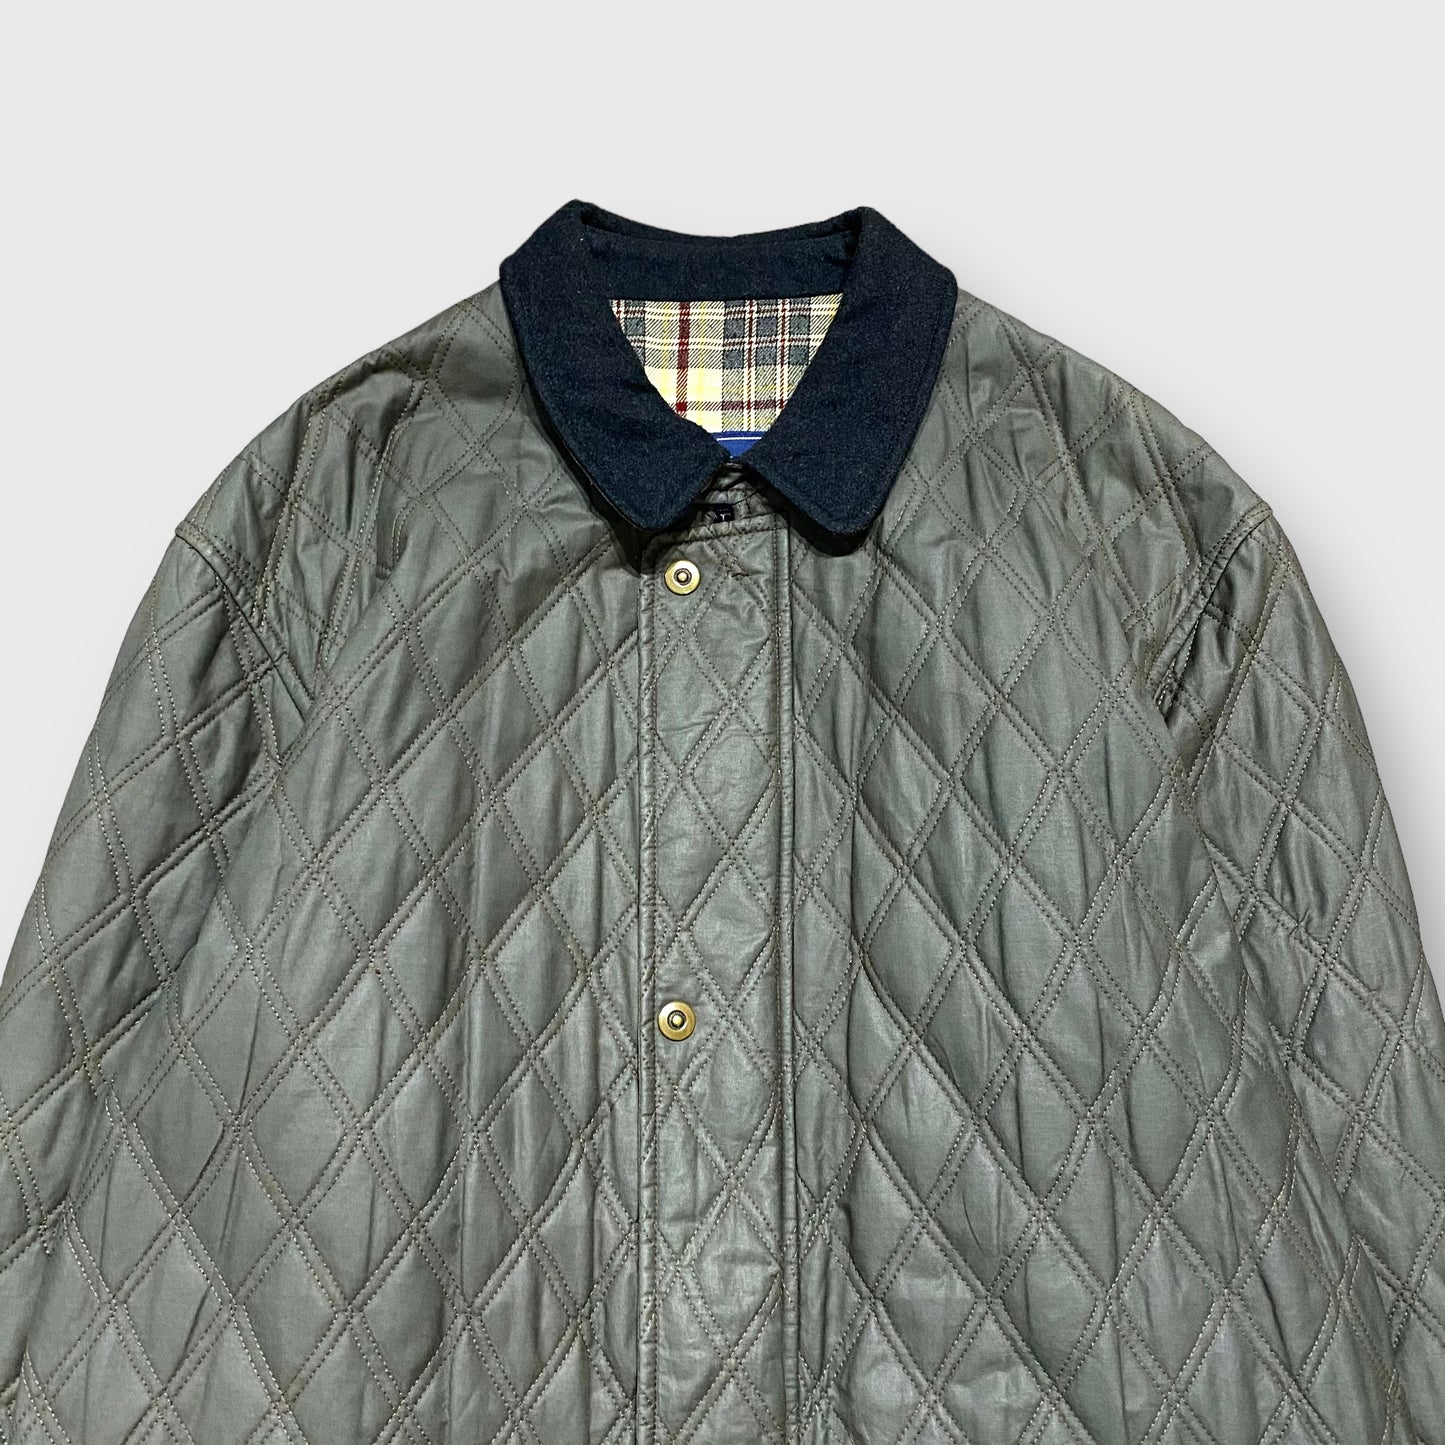 90's "SCELTO" Quilting jacket